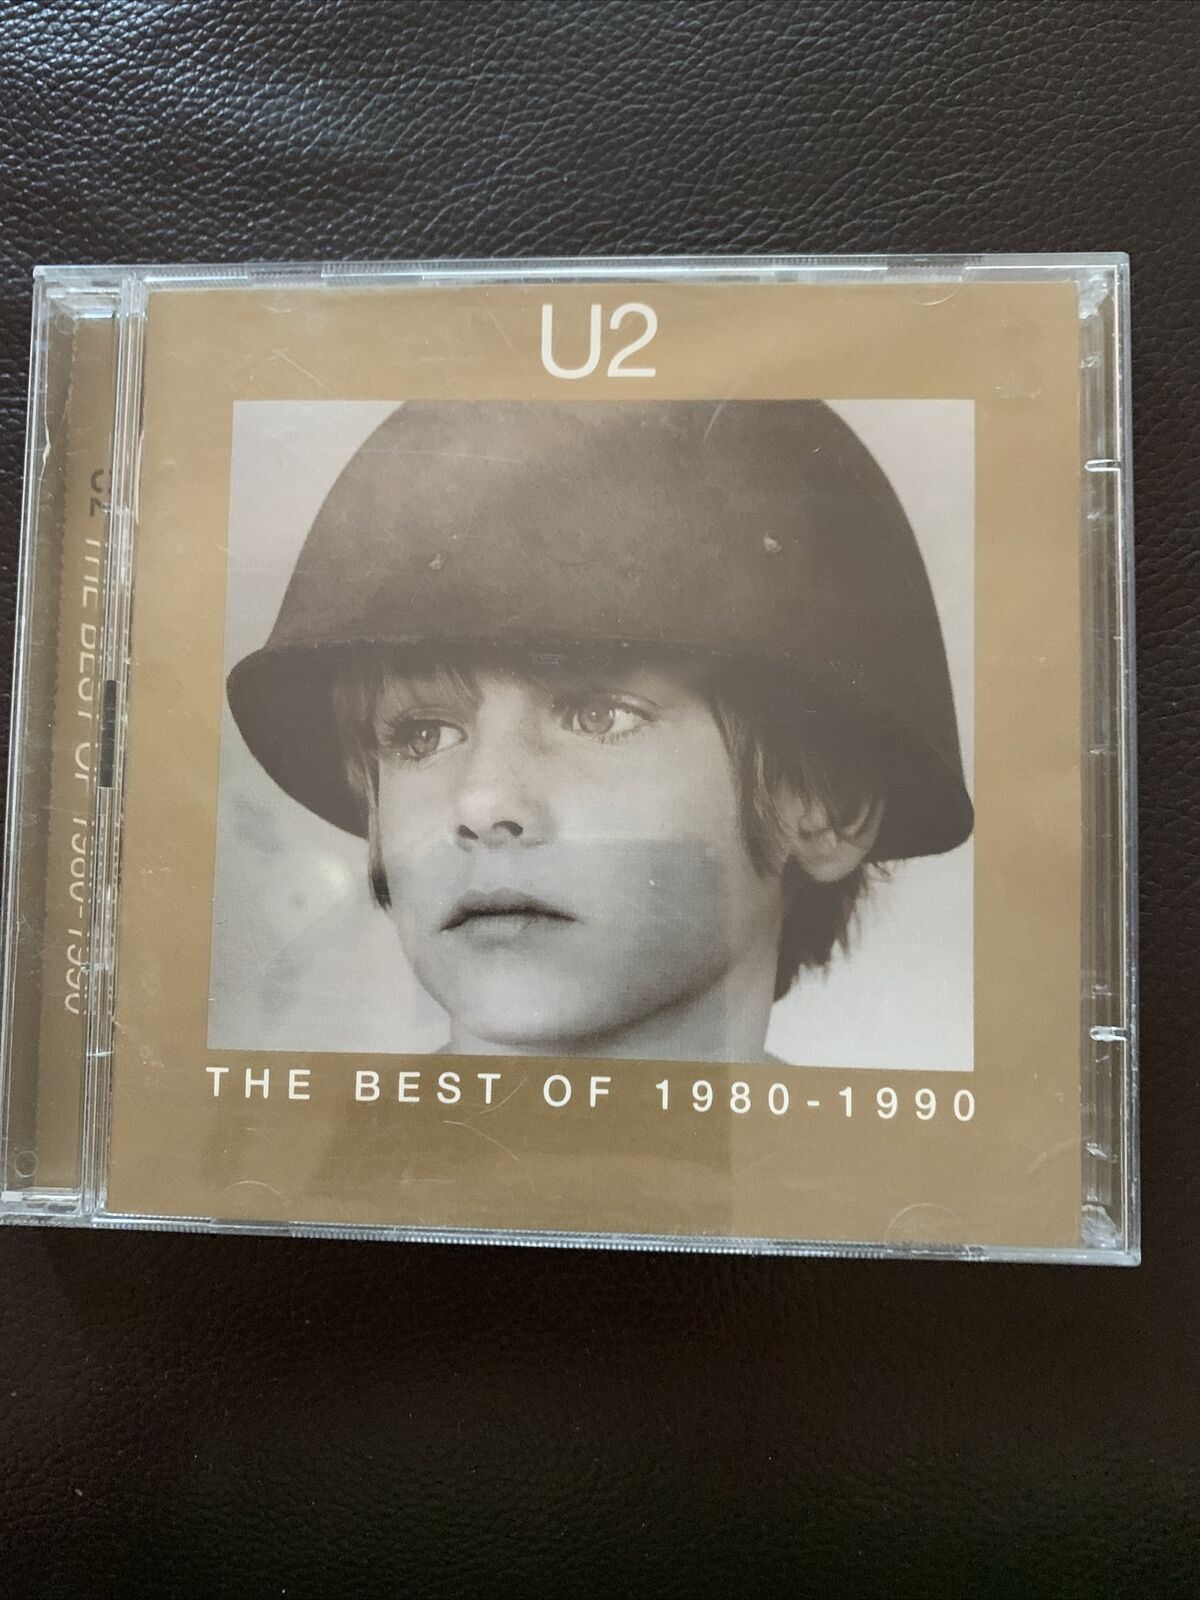 U2 - The Best of 1980-1990/The B-Sides (2 x CD 1998 Polygram 2CD)